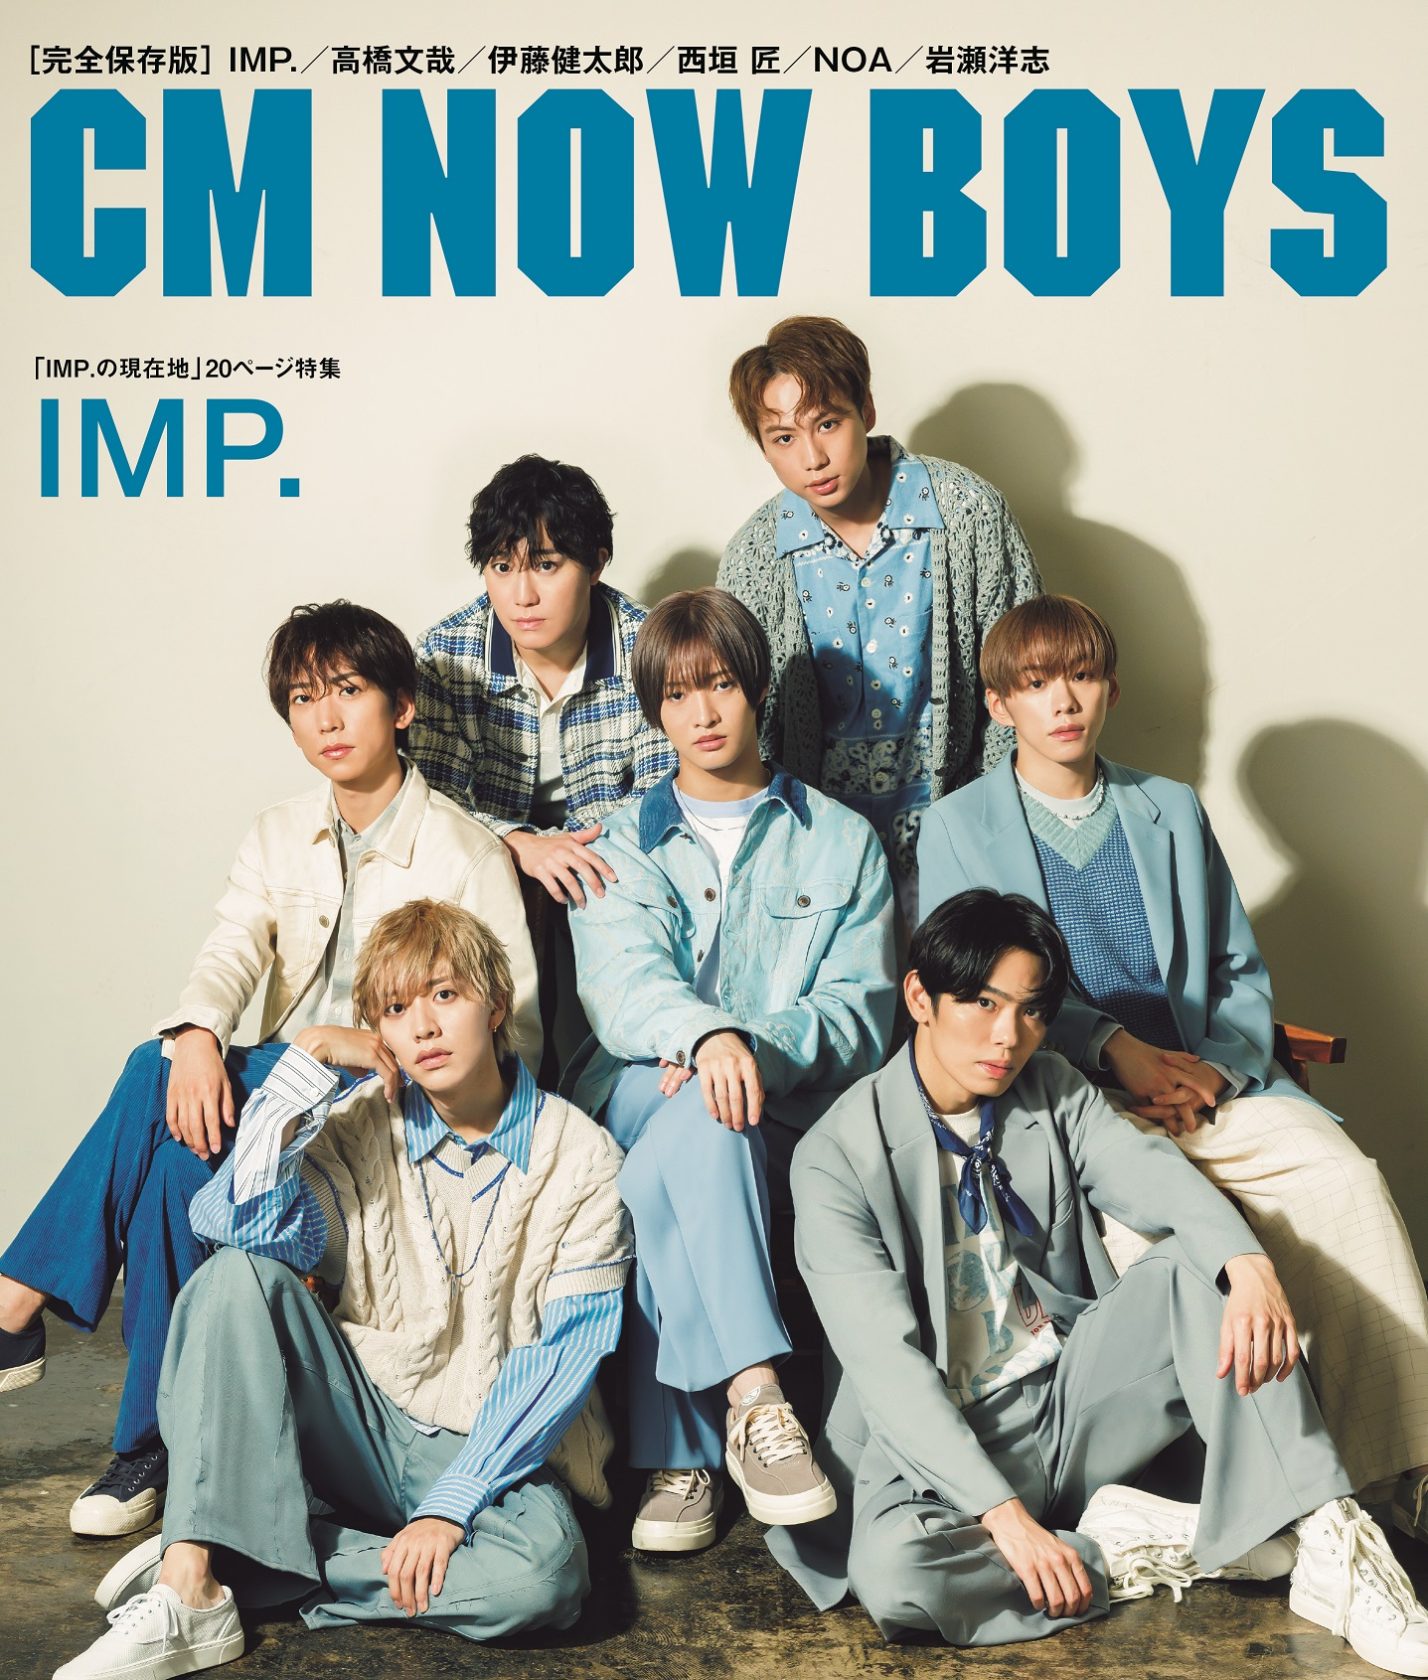 IMP.が「CM NOW BOYS」の裏表紙に登場！来年1月24日発売号、個別質問や座談会の模様も収録